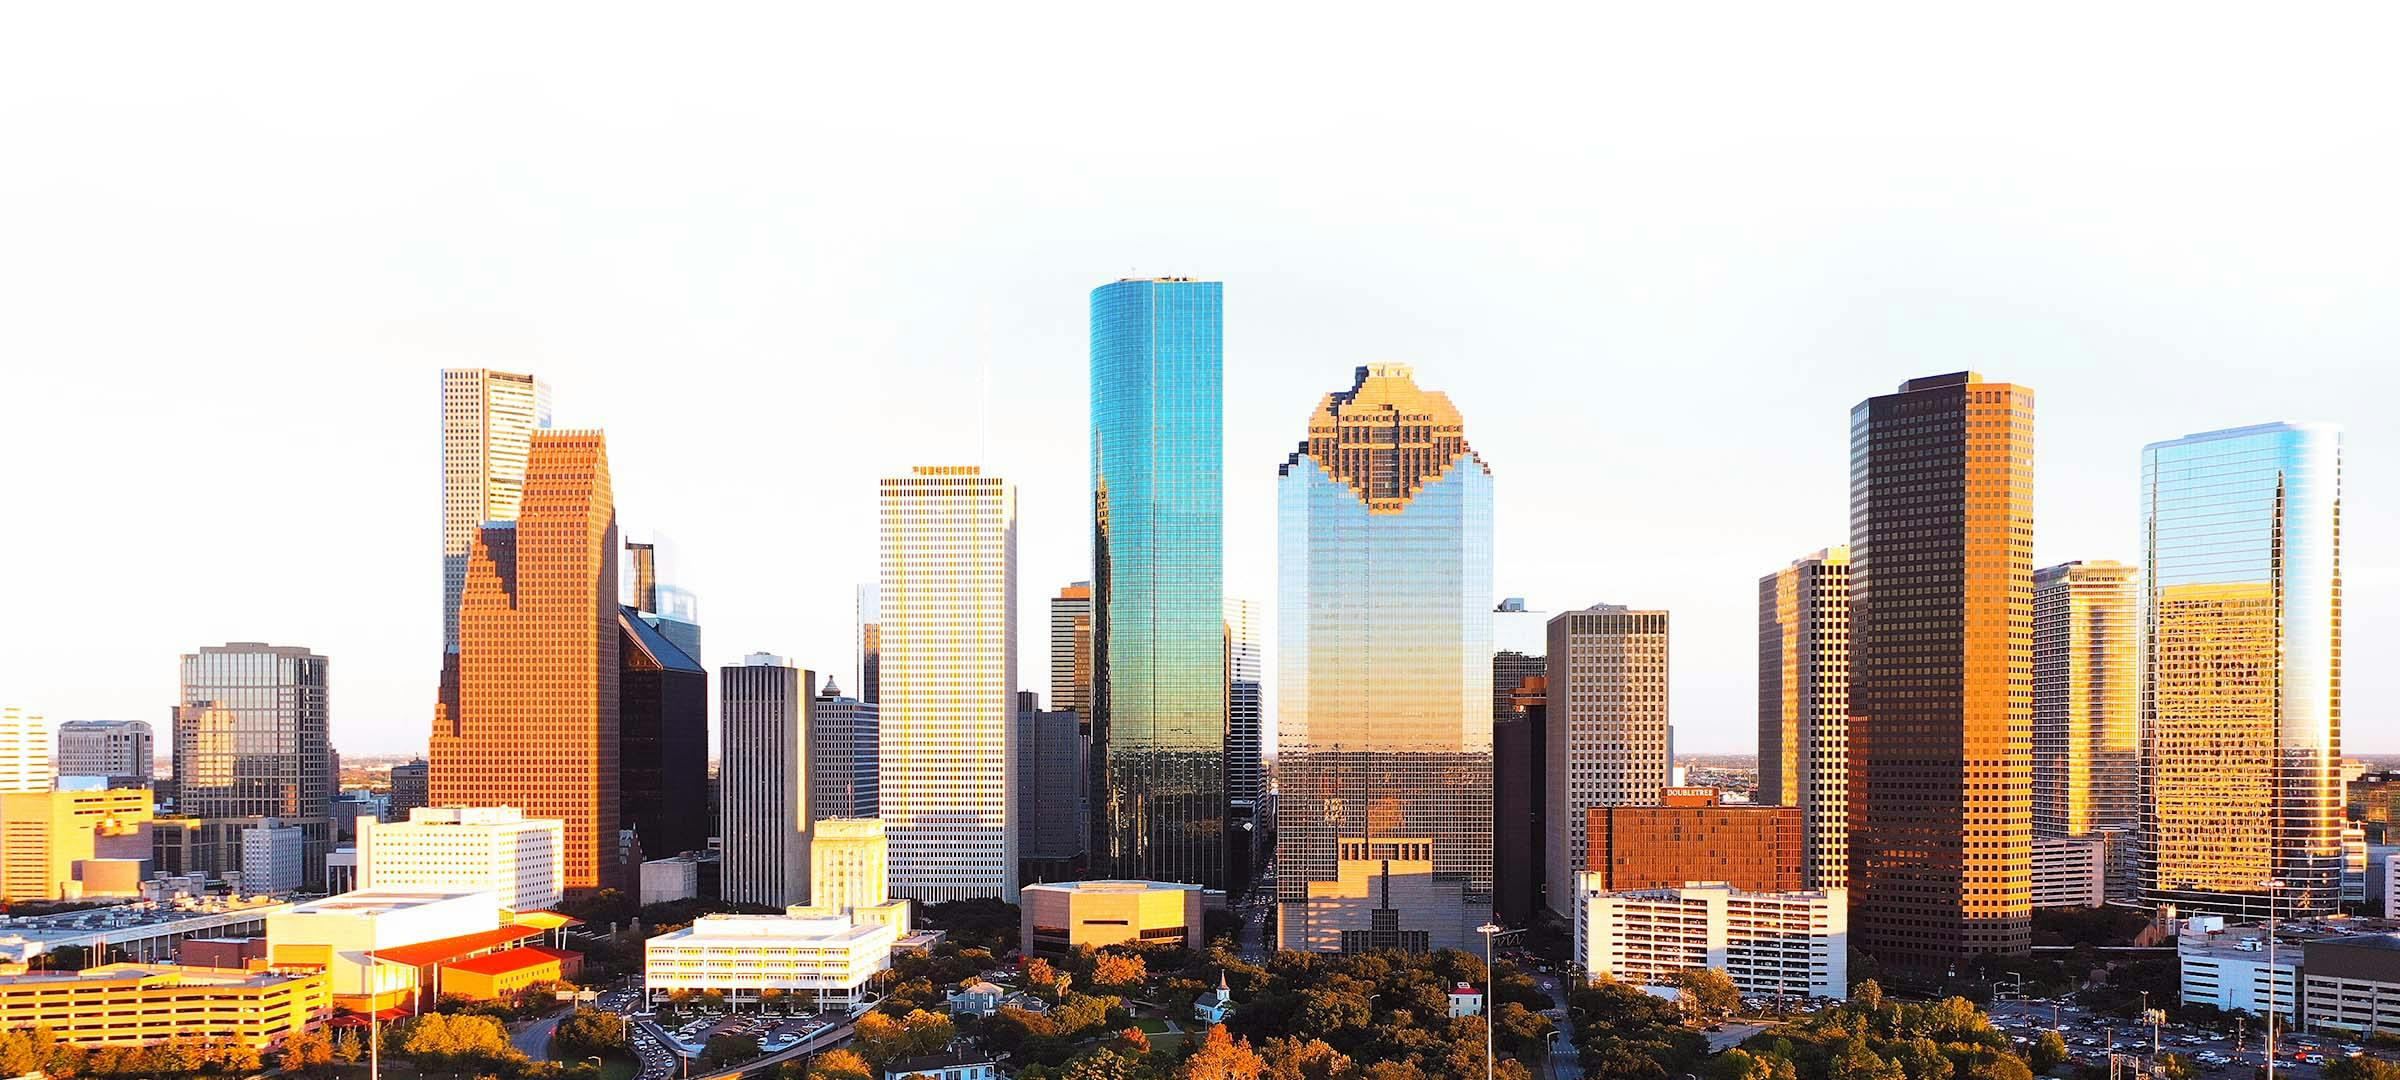 Skyline view of Houston city